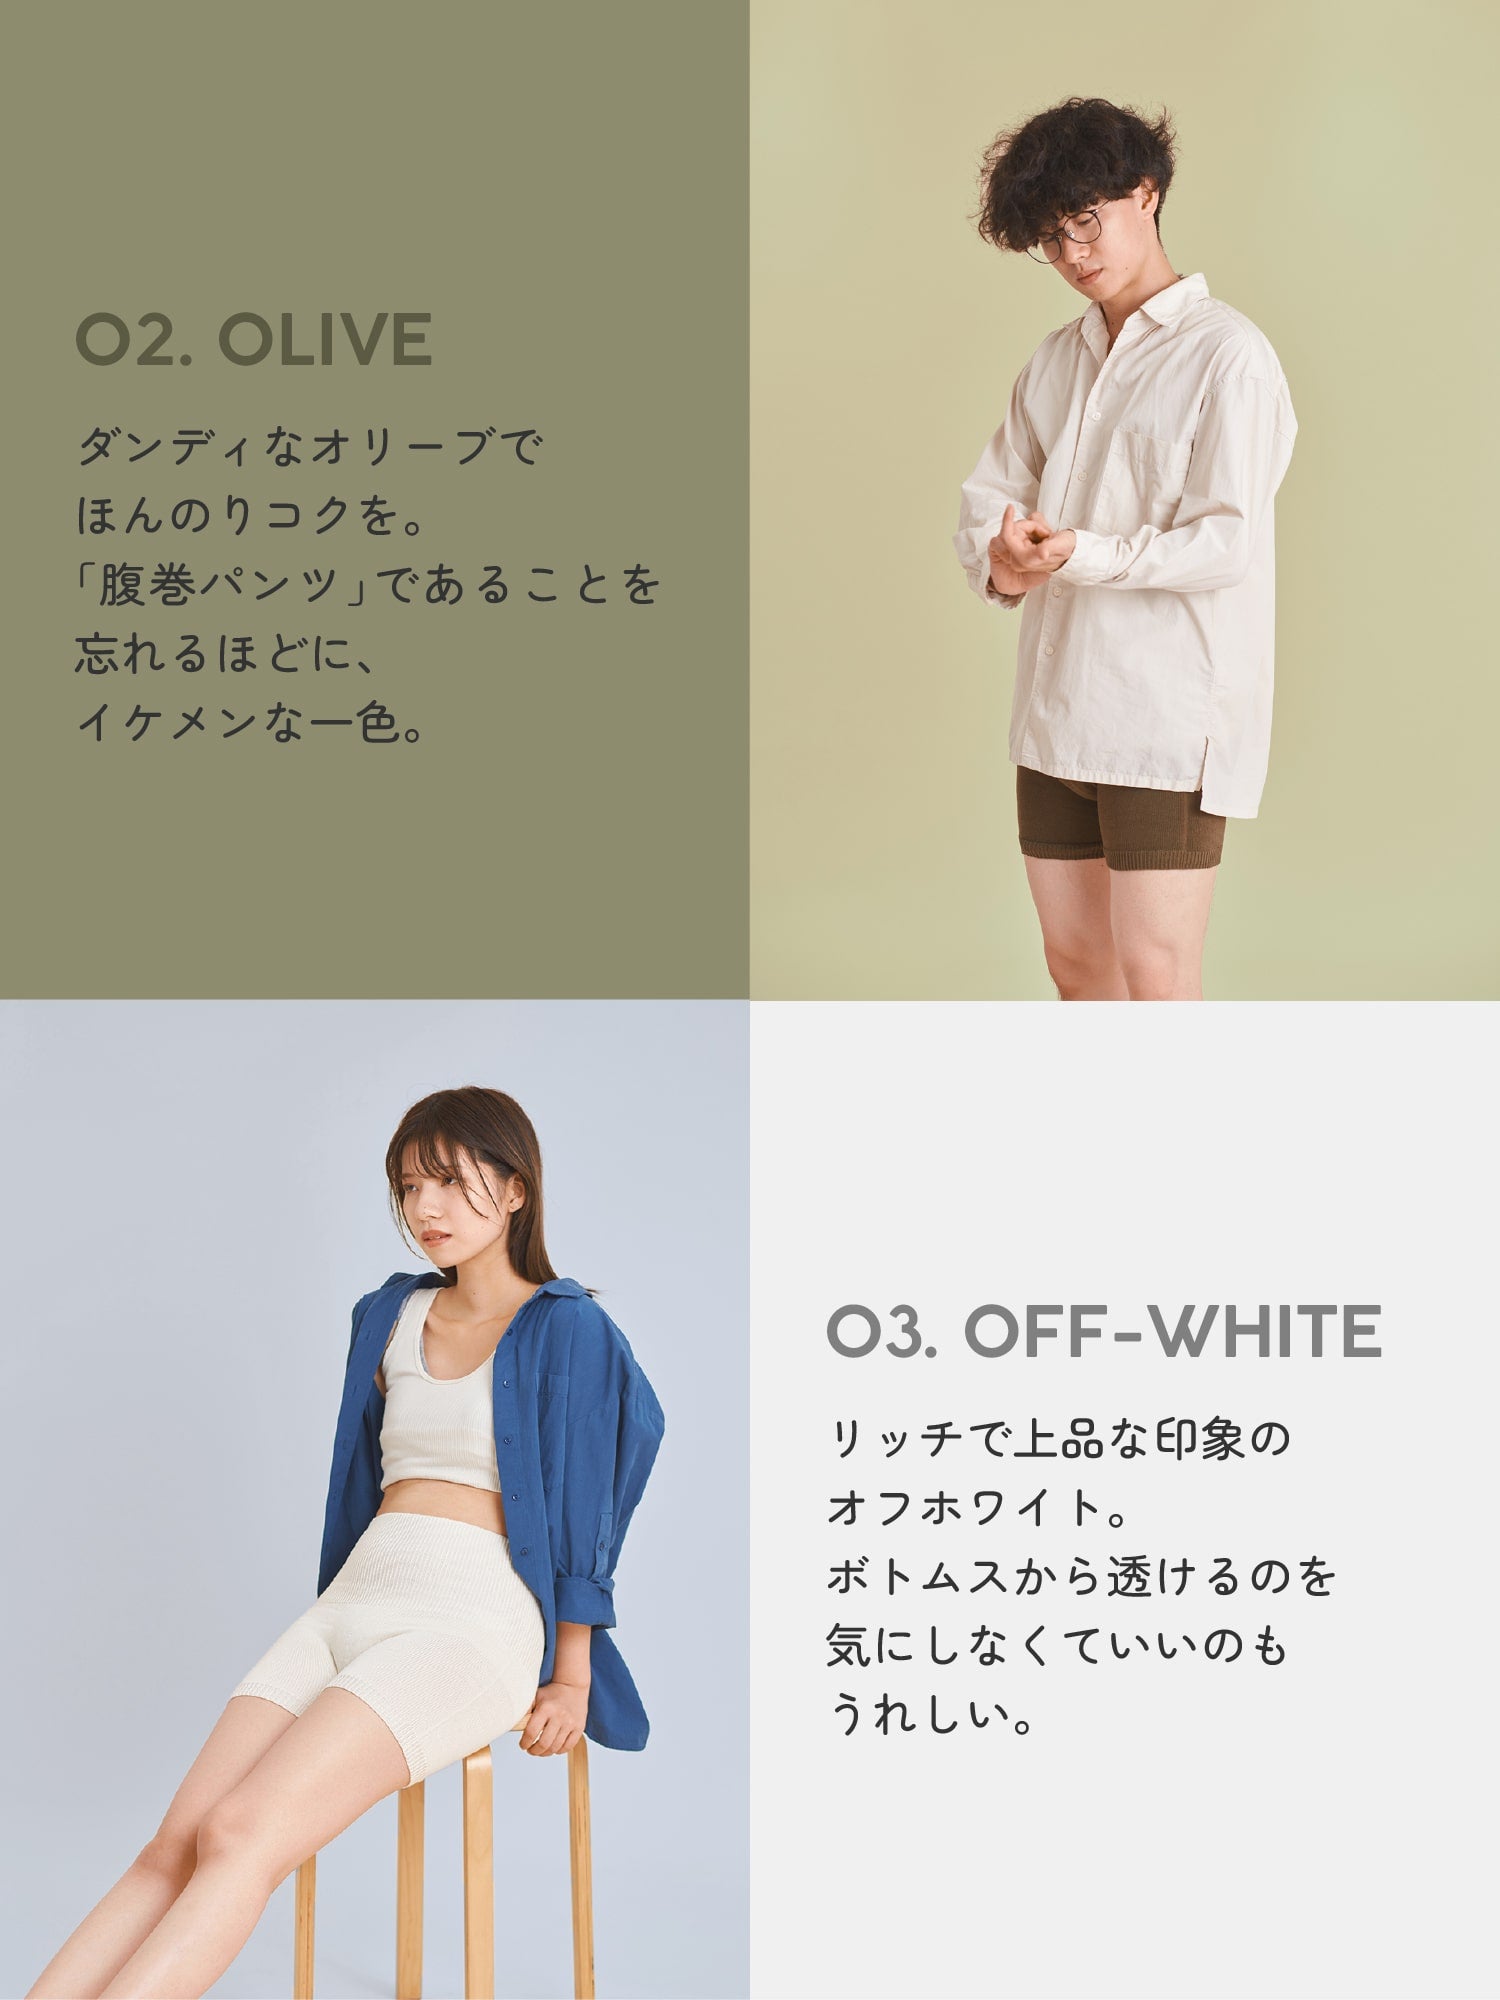 02. OLIVE 03. OFF-WHITE